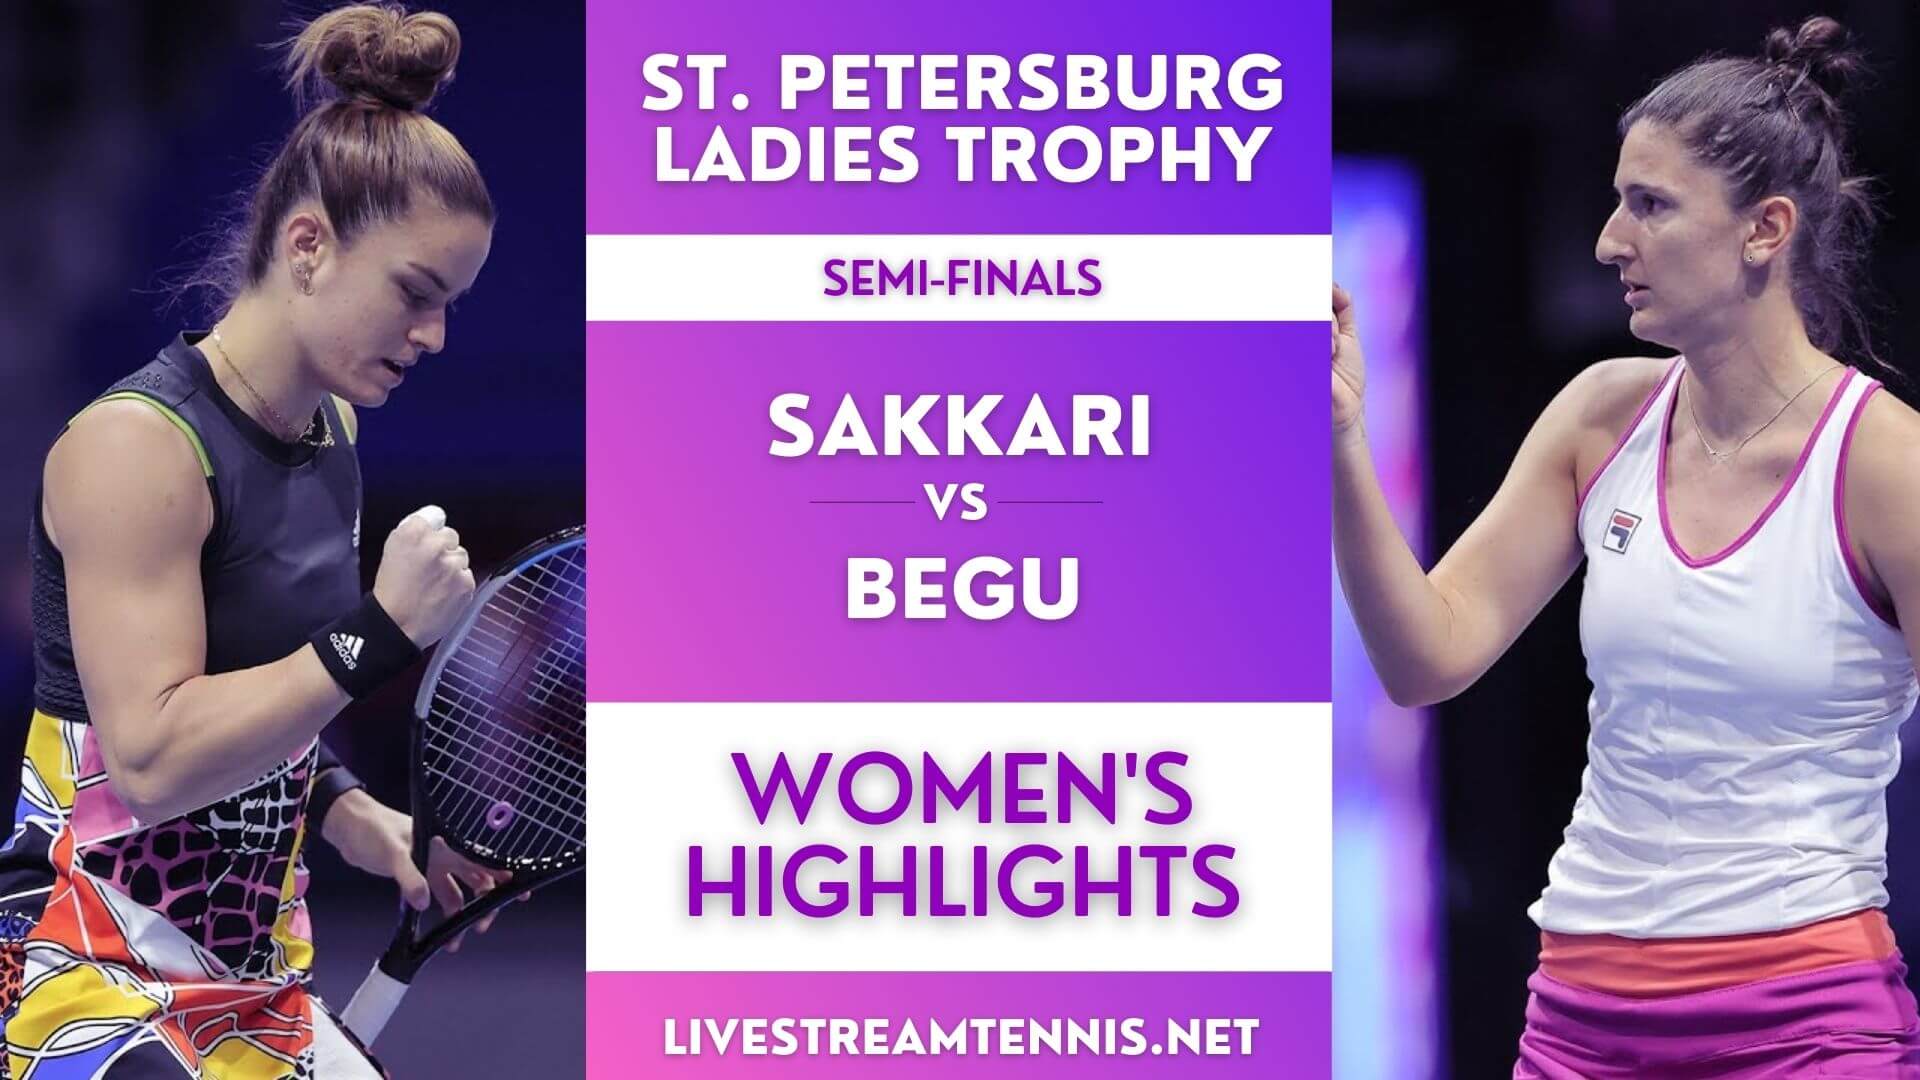 Ladies Trophy WTA Semi Final 2 Highlights 2022